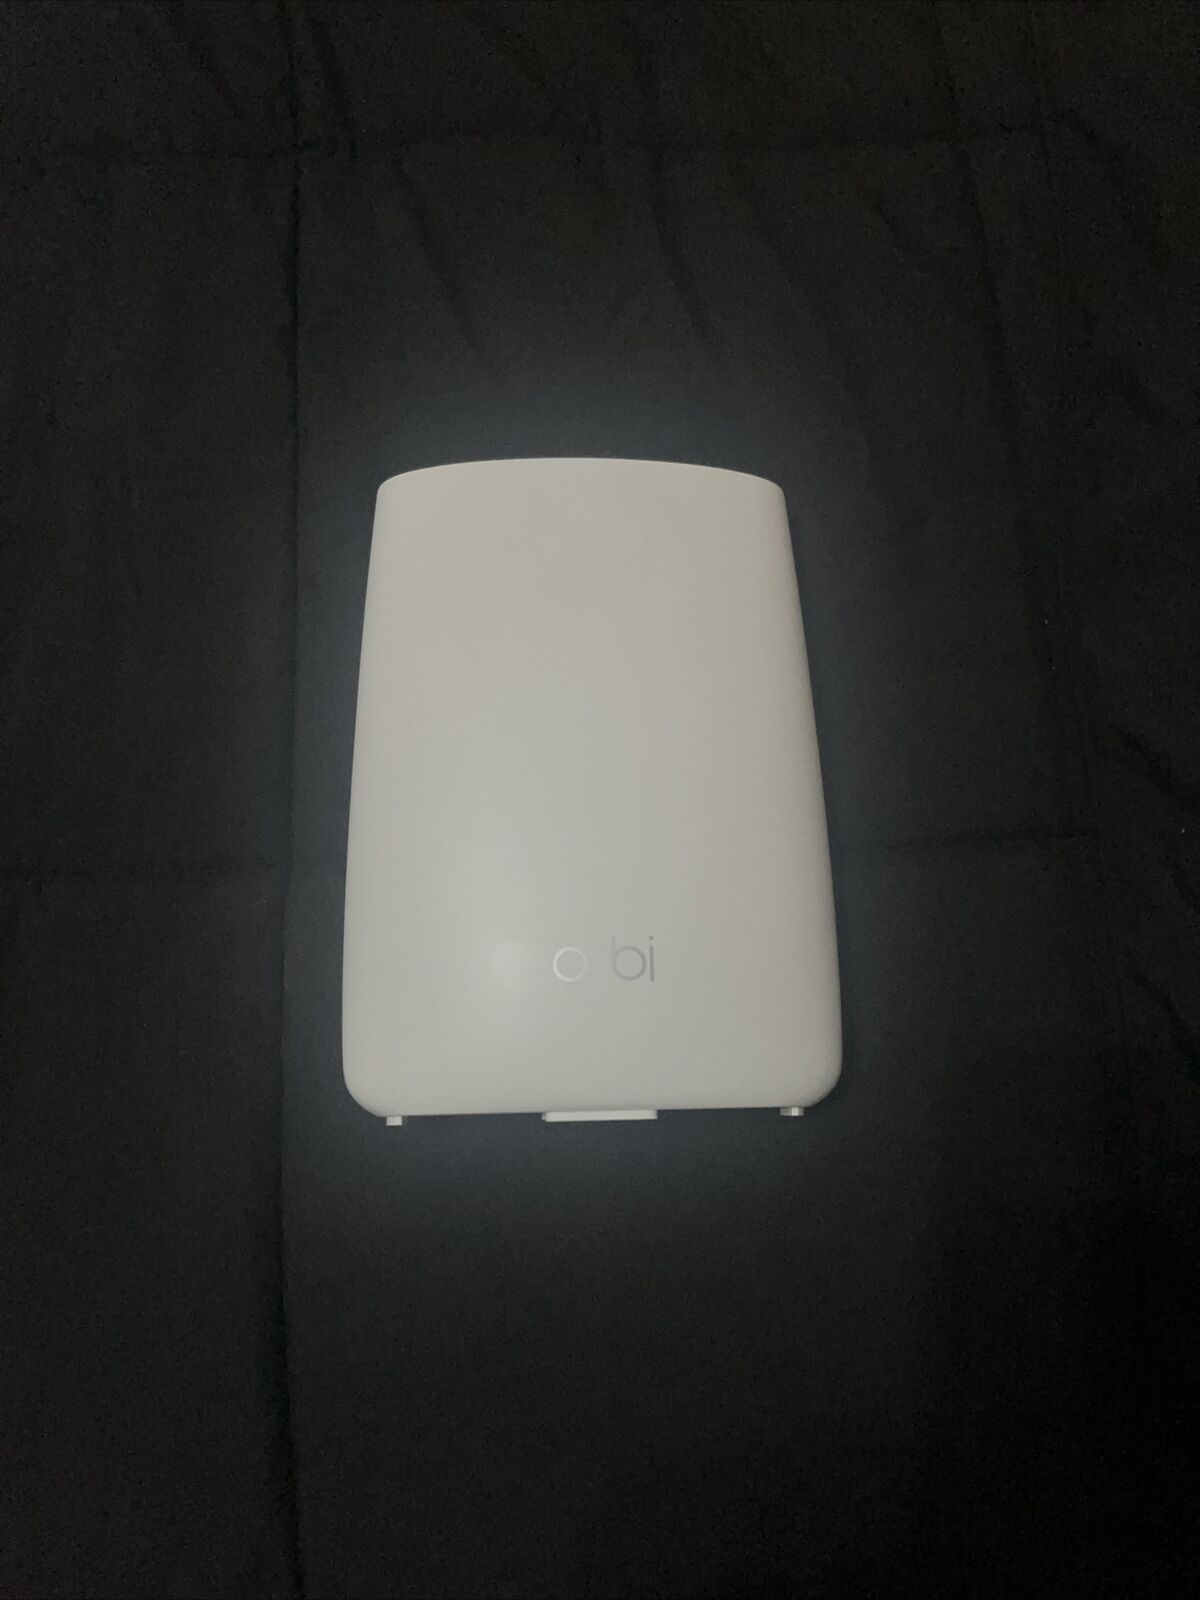 Orbi RBR50 Satellite Home Mesh WiFi Tri-band Router Netgear Tested - White